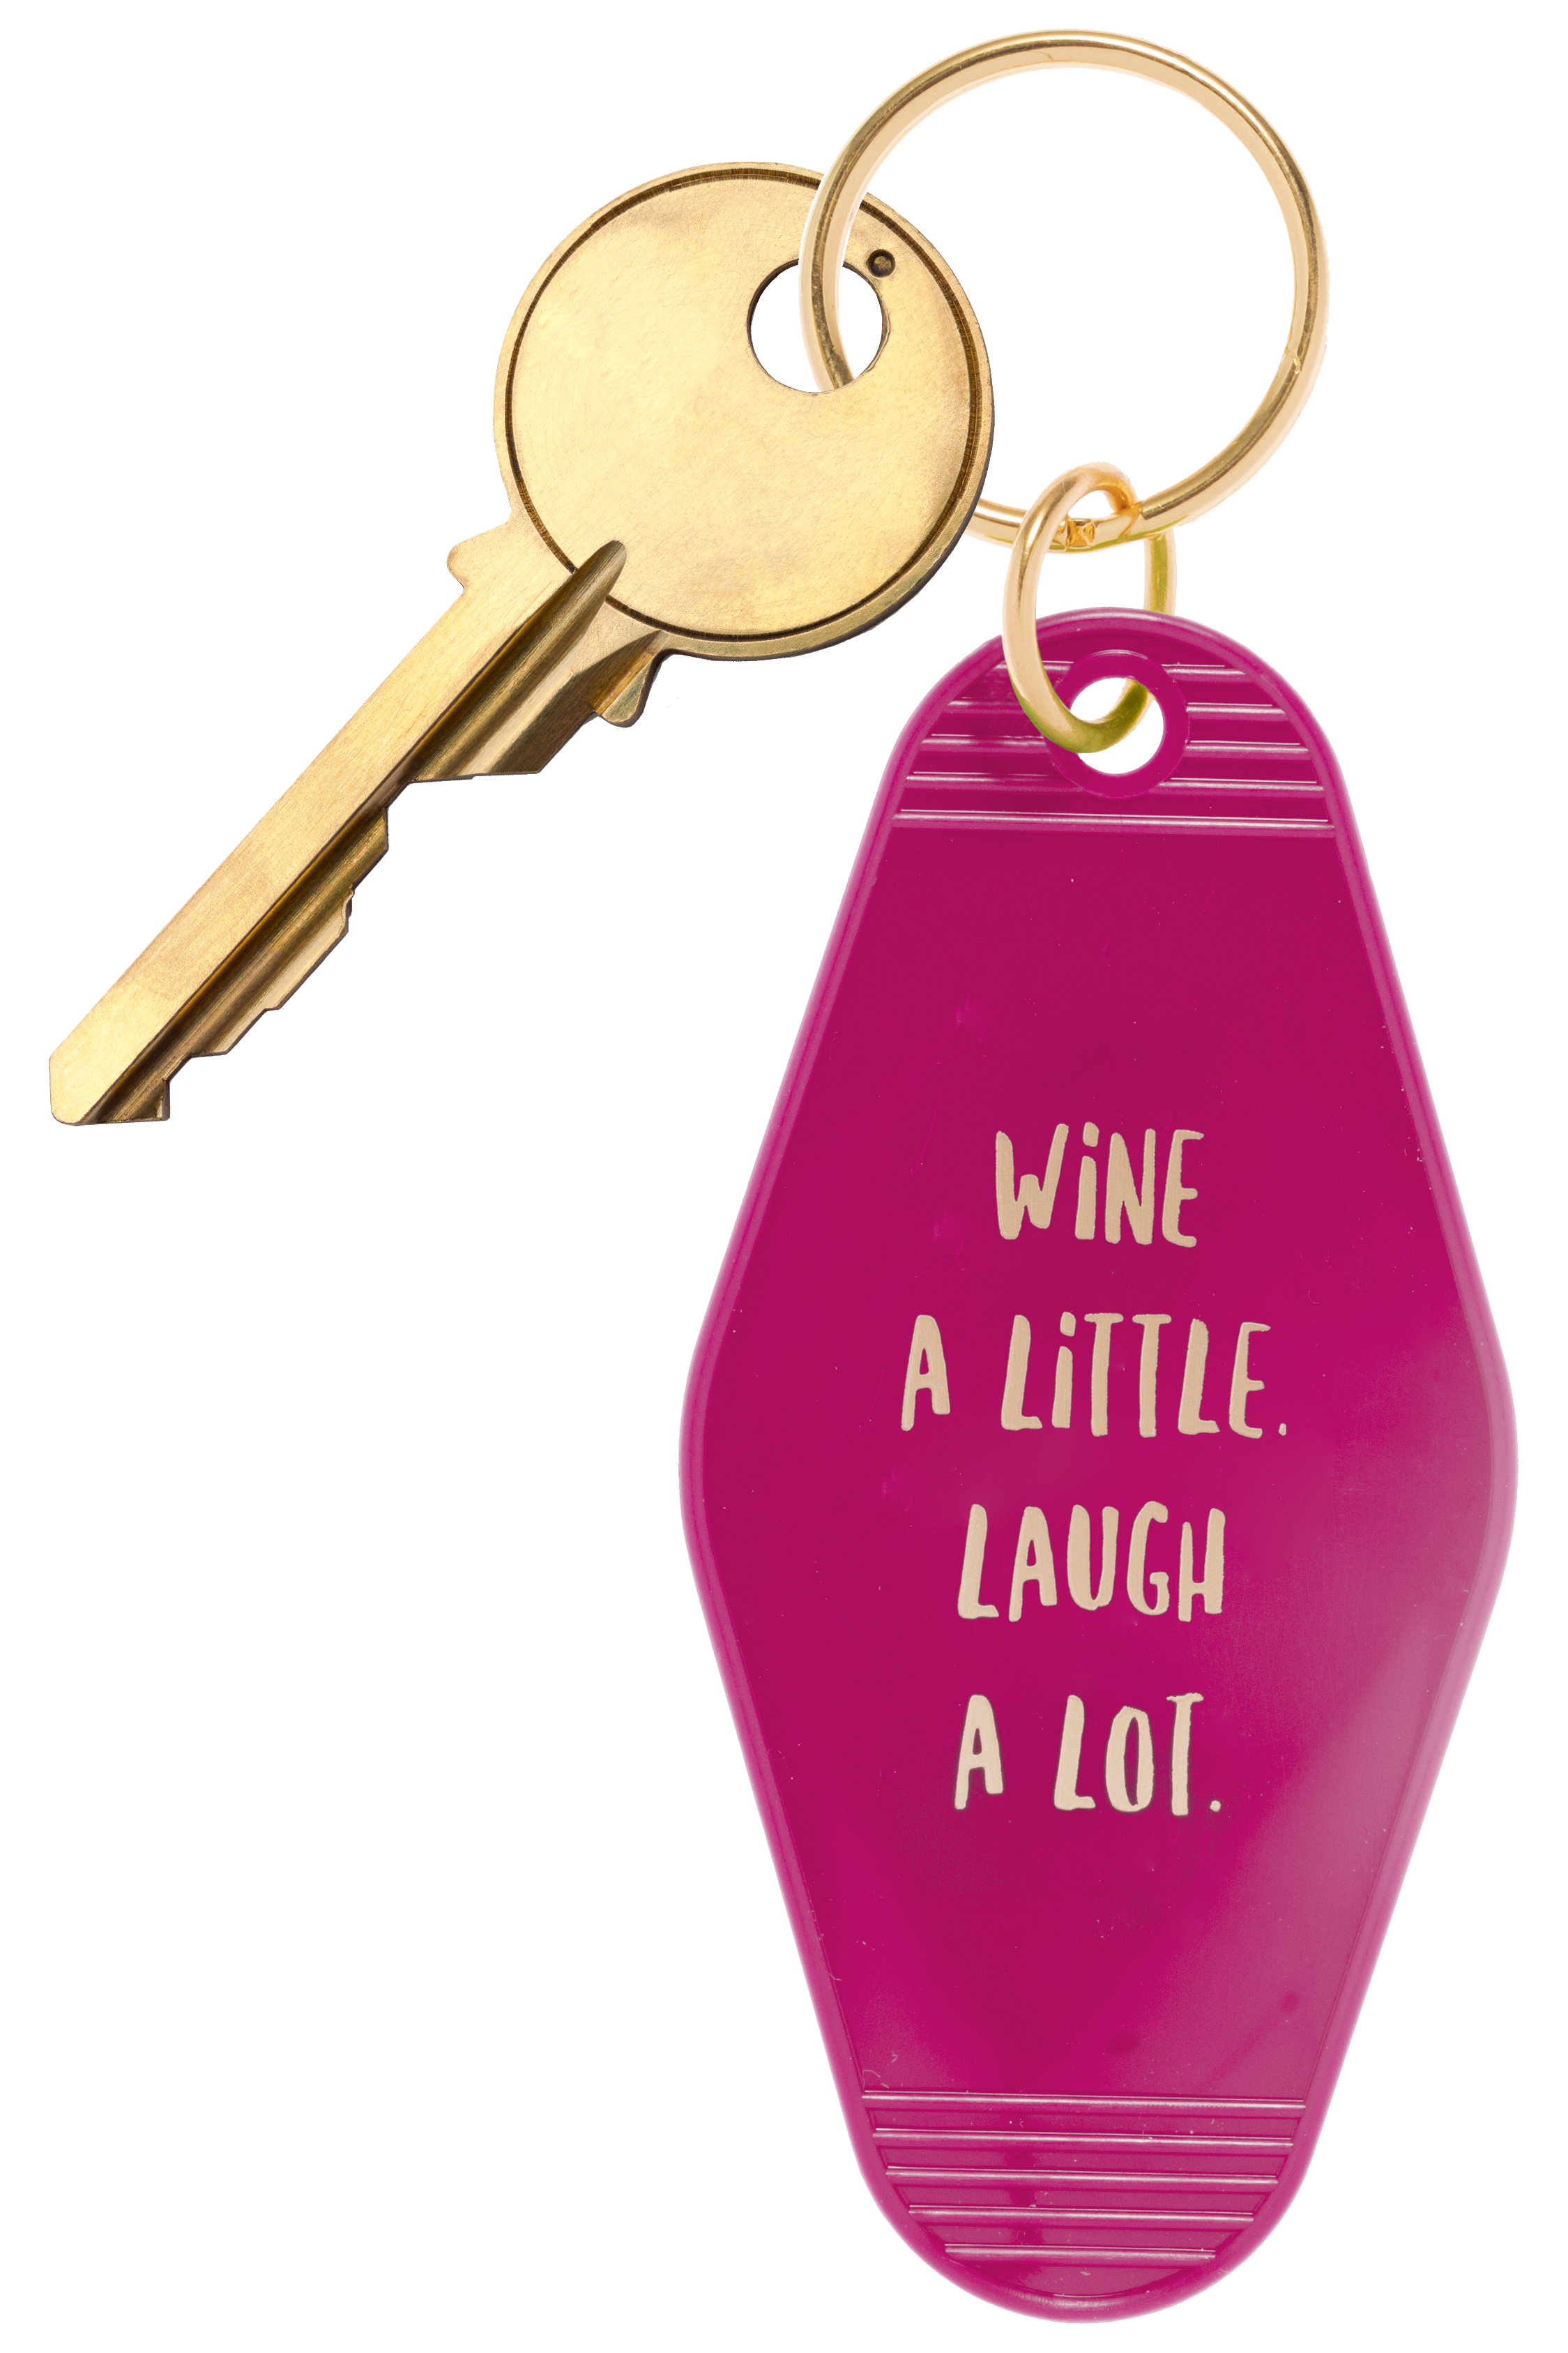 Retro Motel Style Keychain - "Wine A Little. Laugh A Lot"